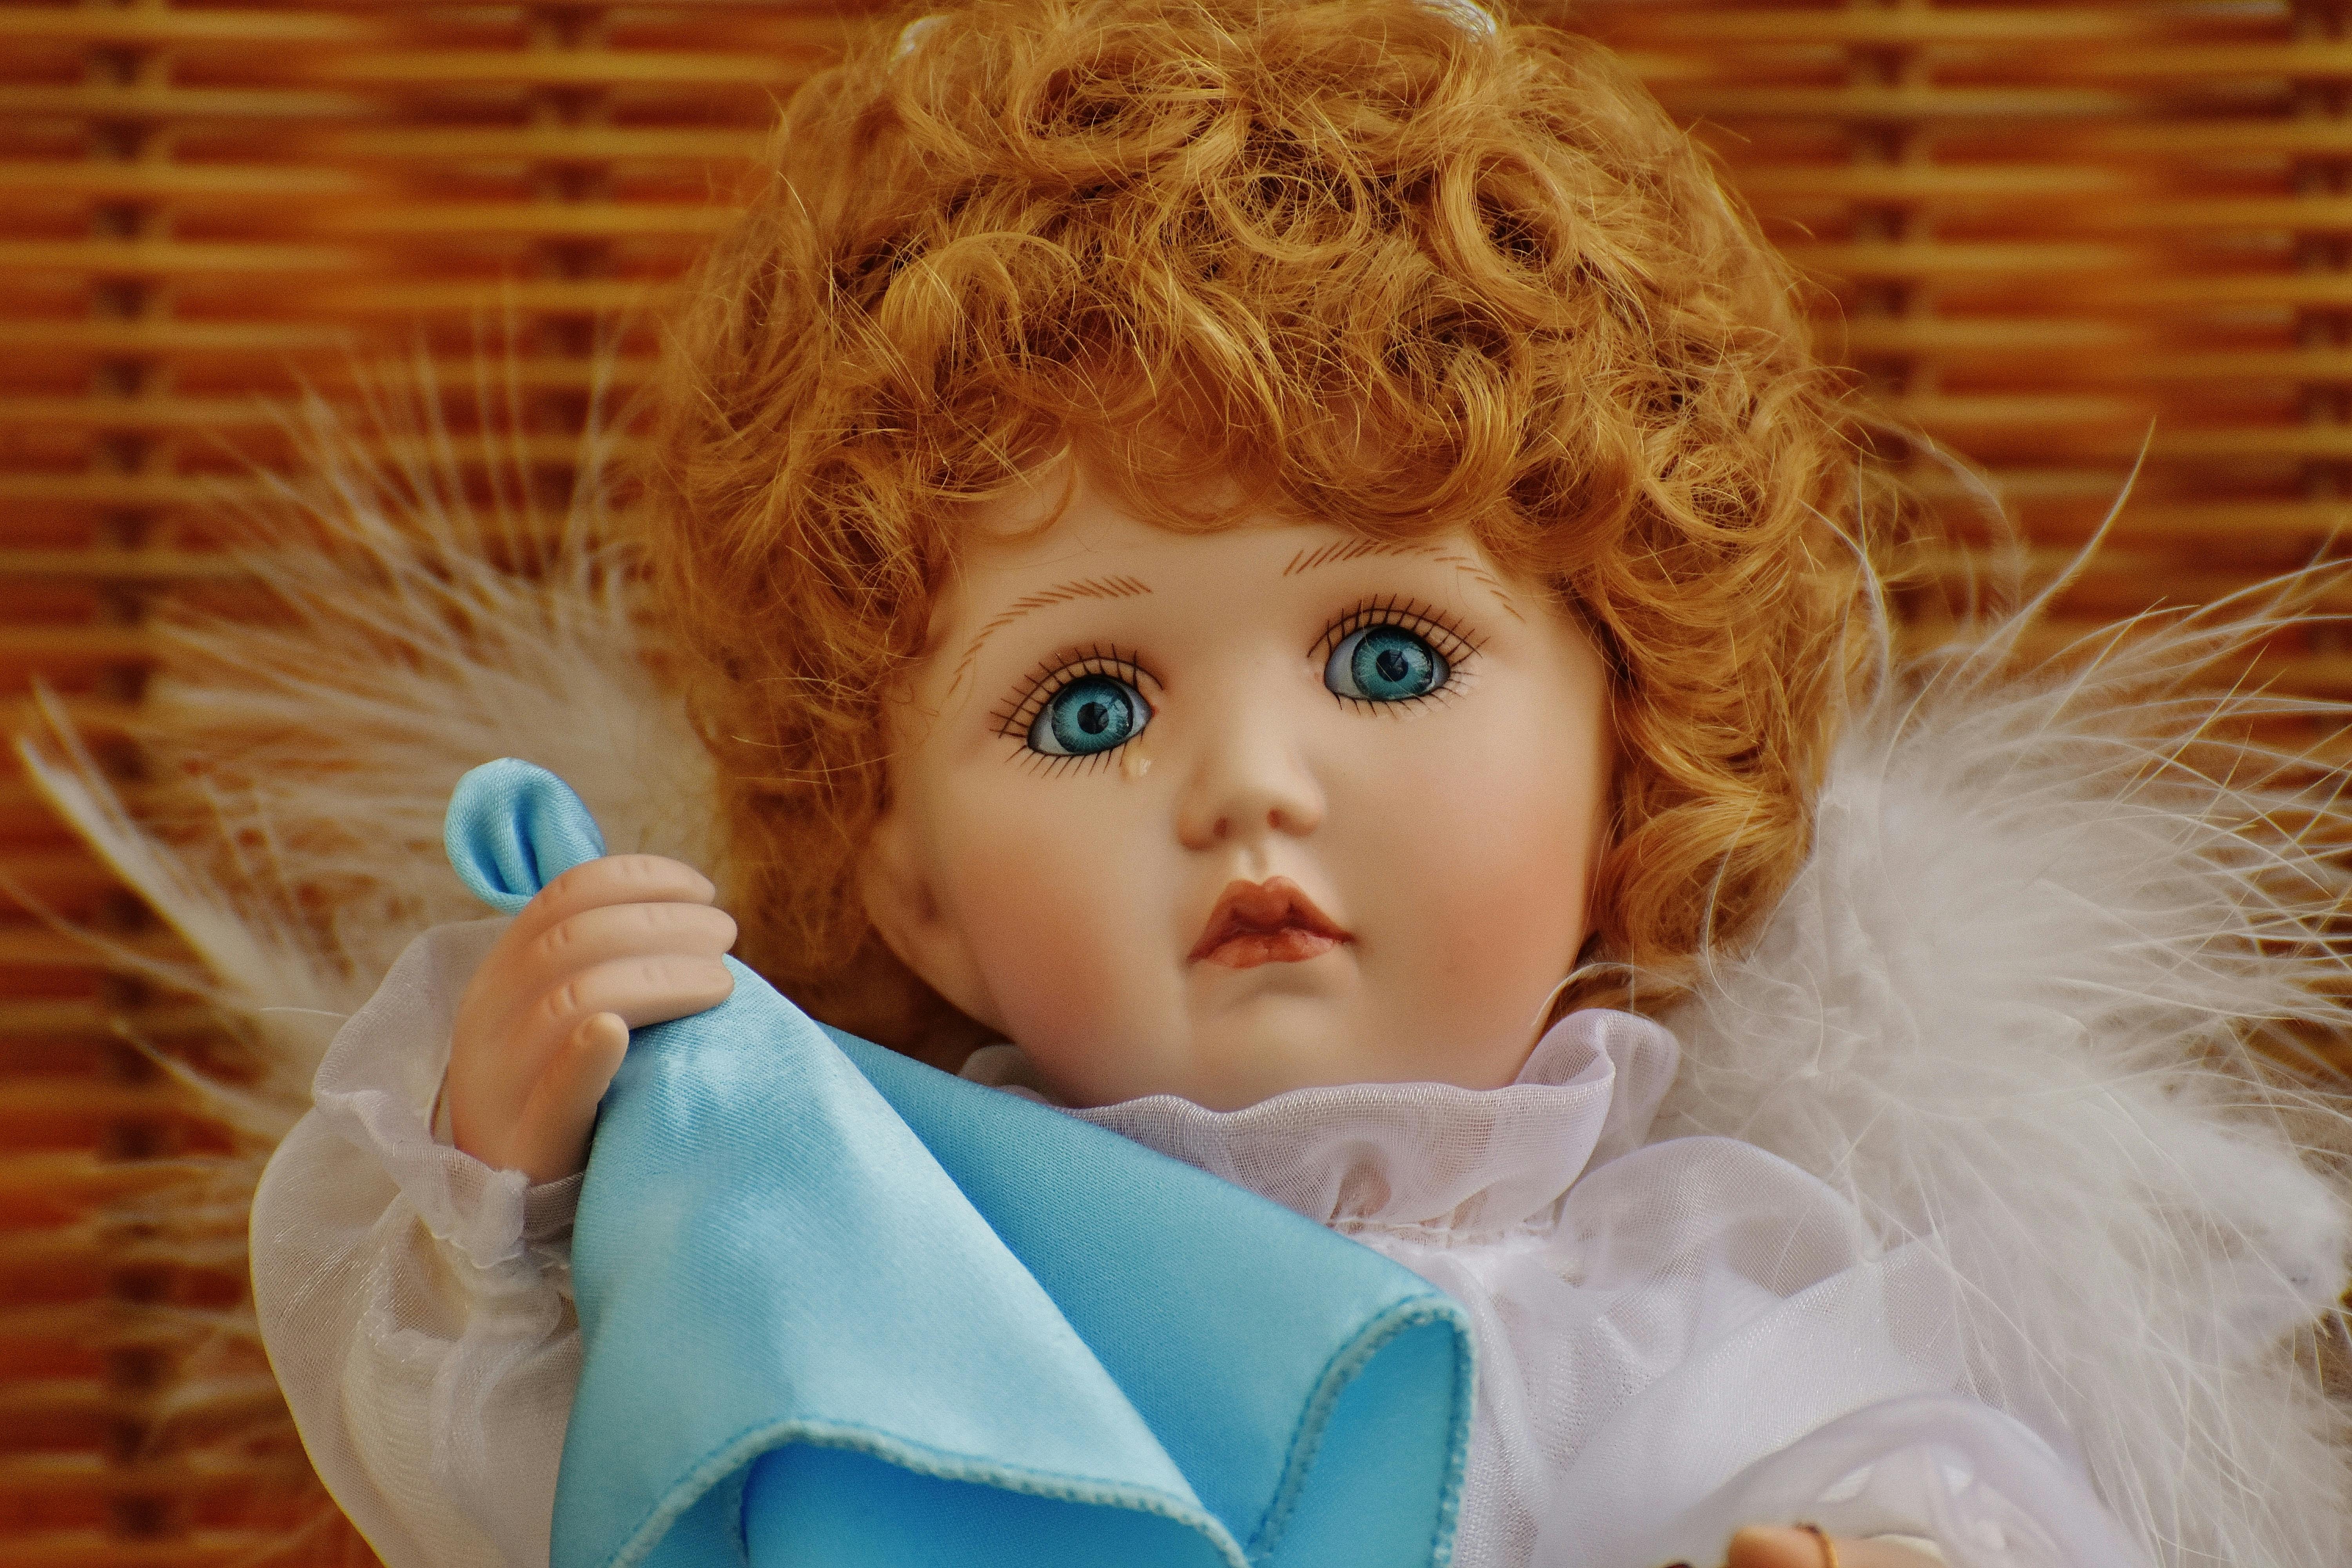 collector-s-doll-angel-guardian-angel-sad-160775.jpeg (6000×4000)